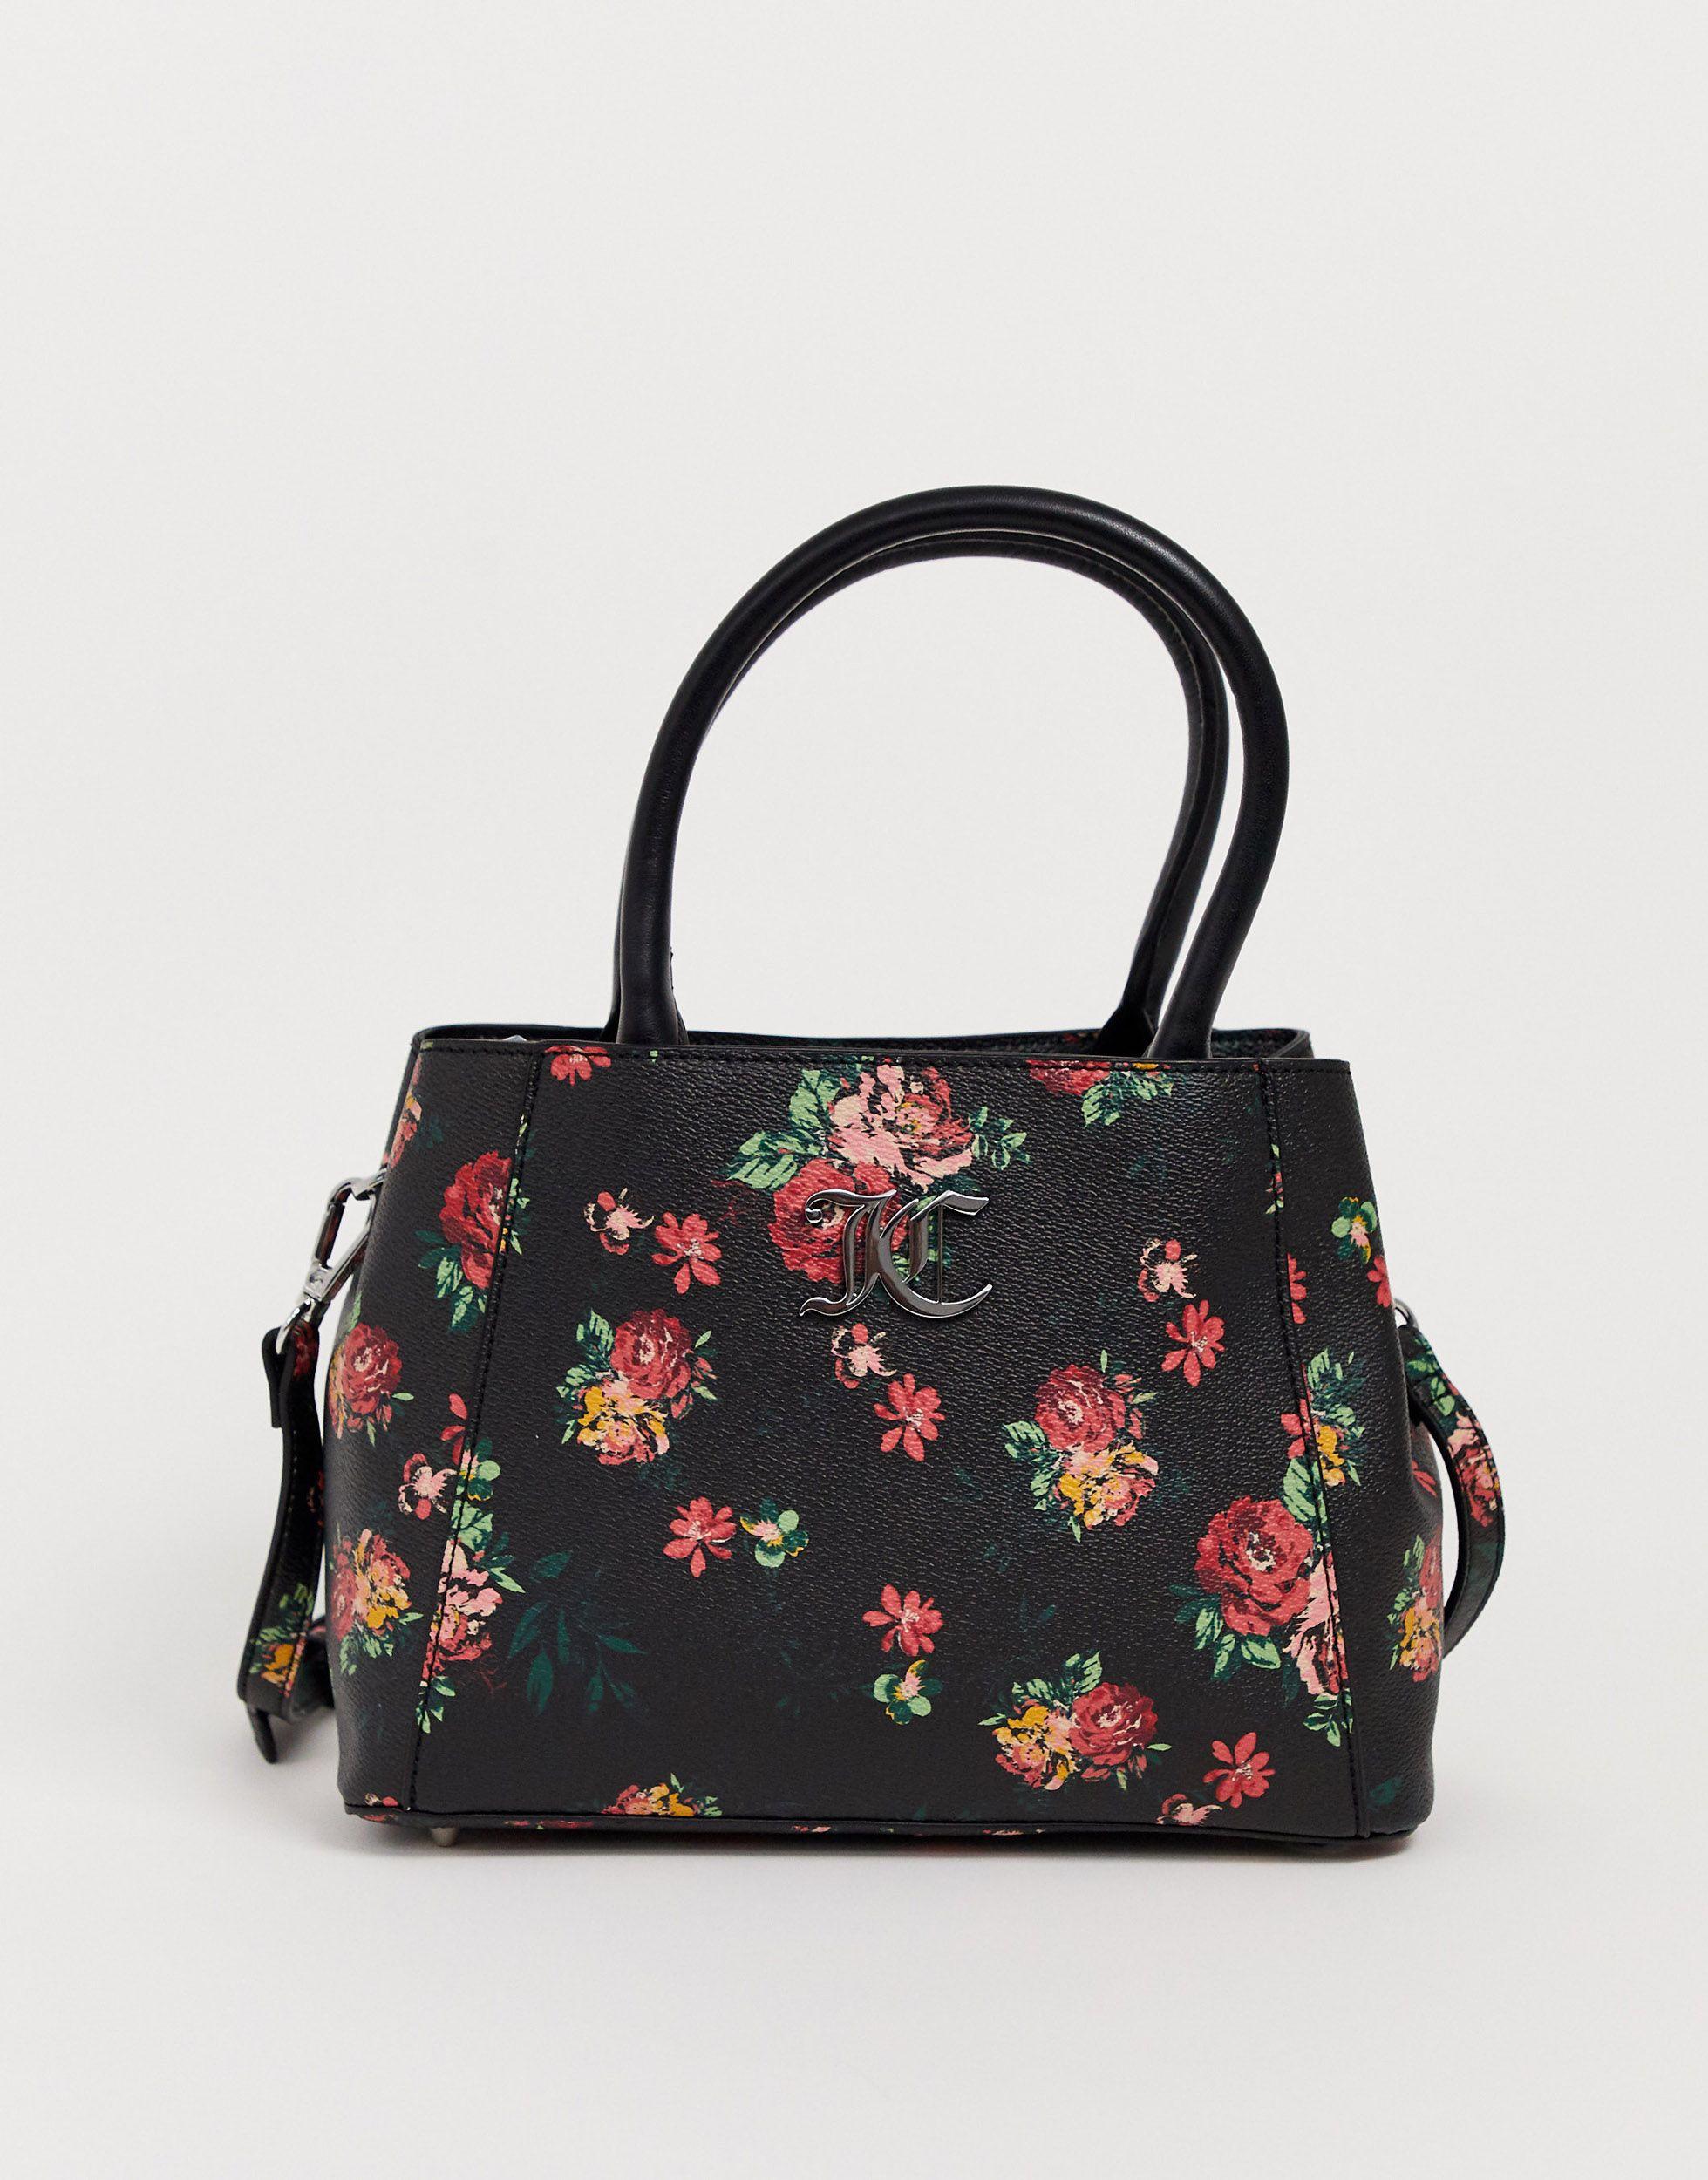 Juicy Couture Floral Tote Bag-black | Lyst